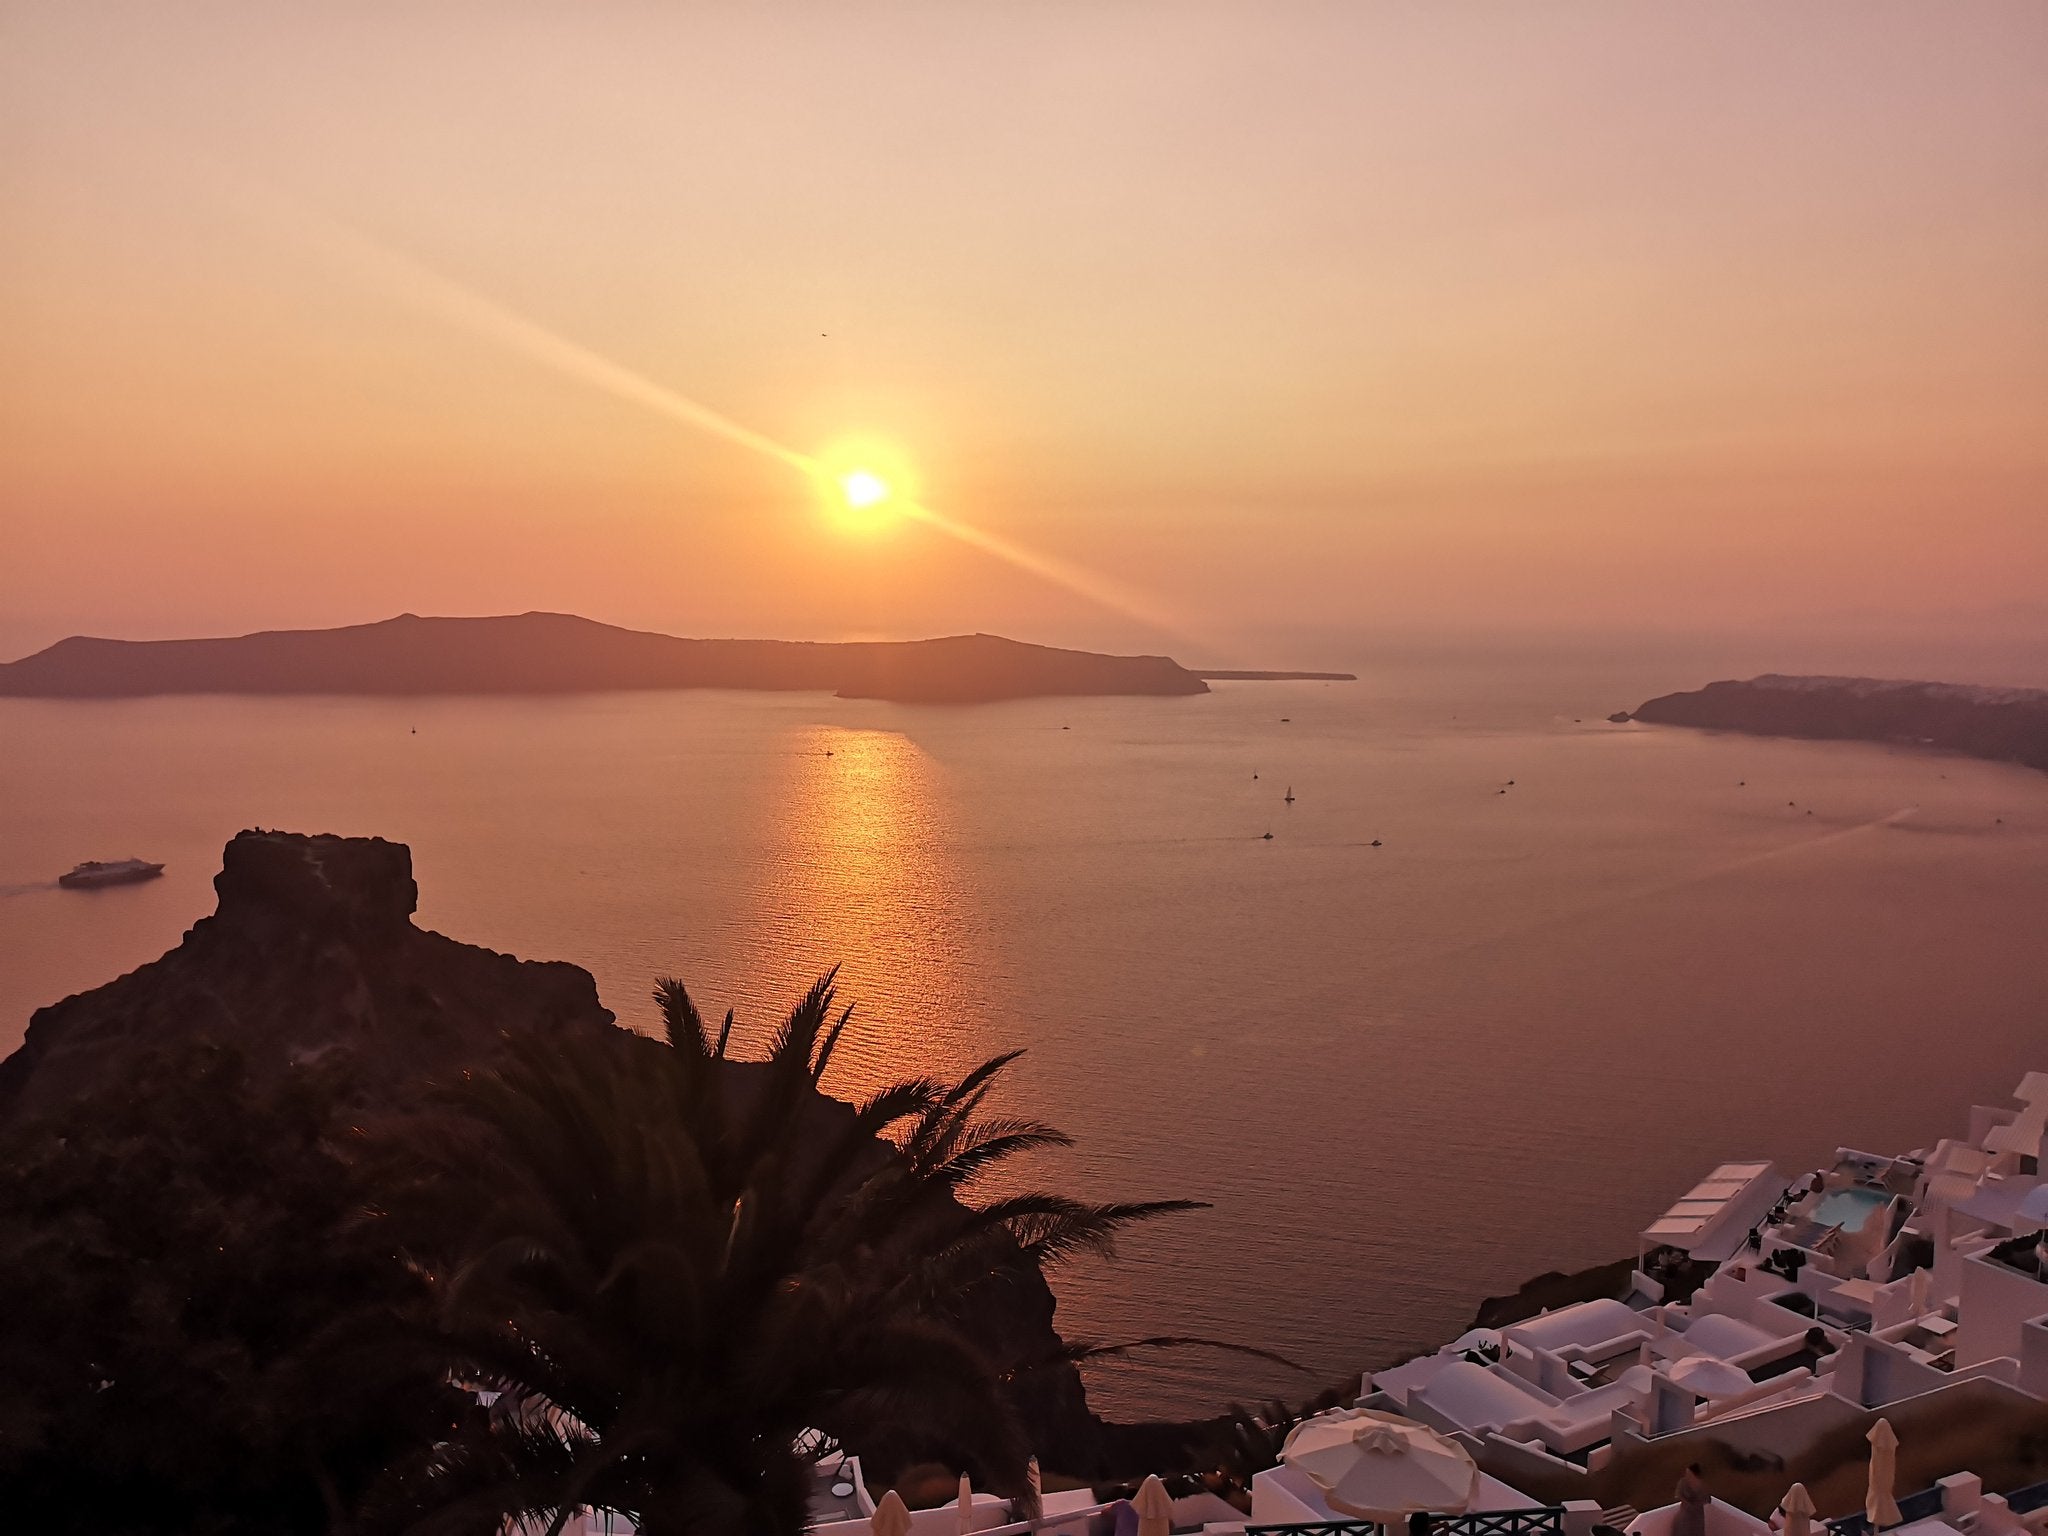 Santorini deserves its glamorous rep